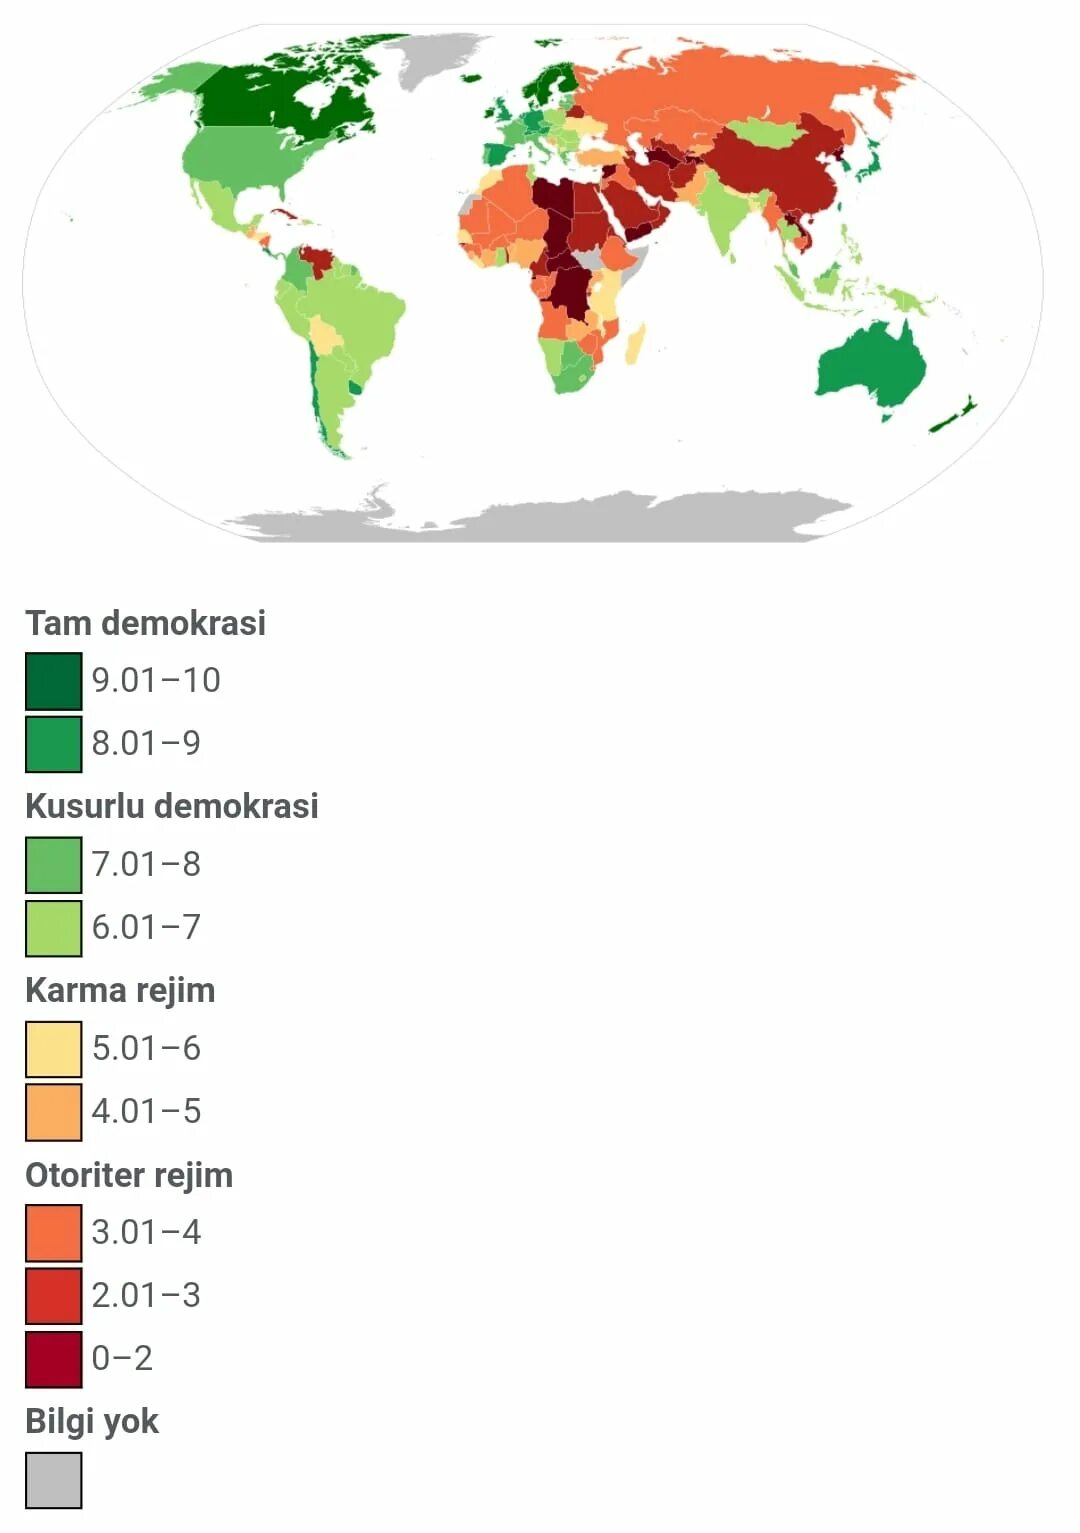 Карта демократии. Индекс демократии. Страны по индексу демократии. Индекс демократии карта.